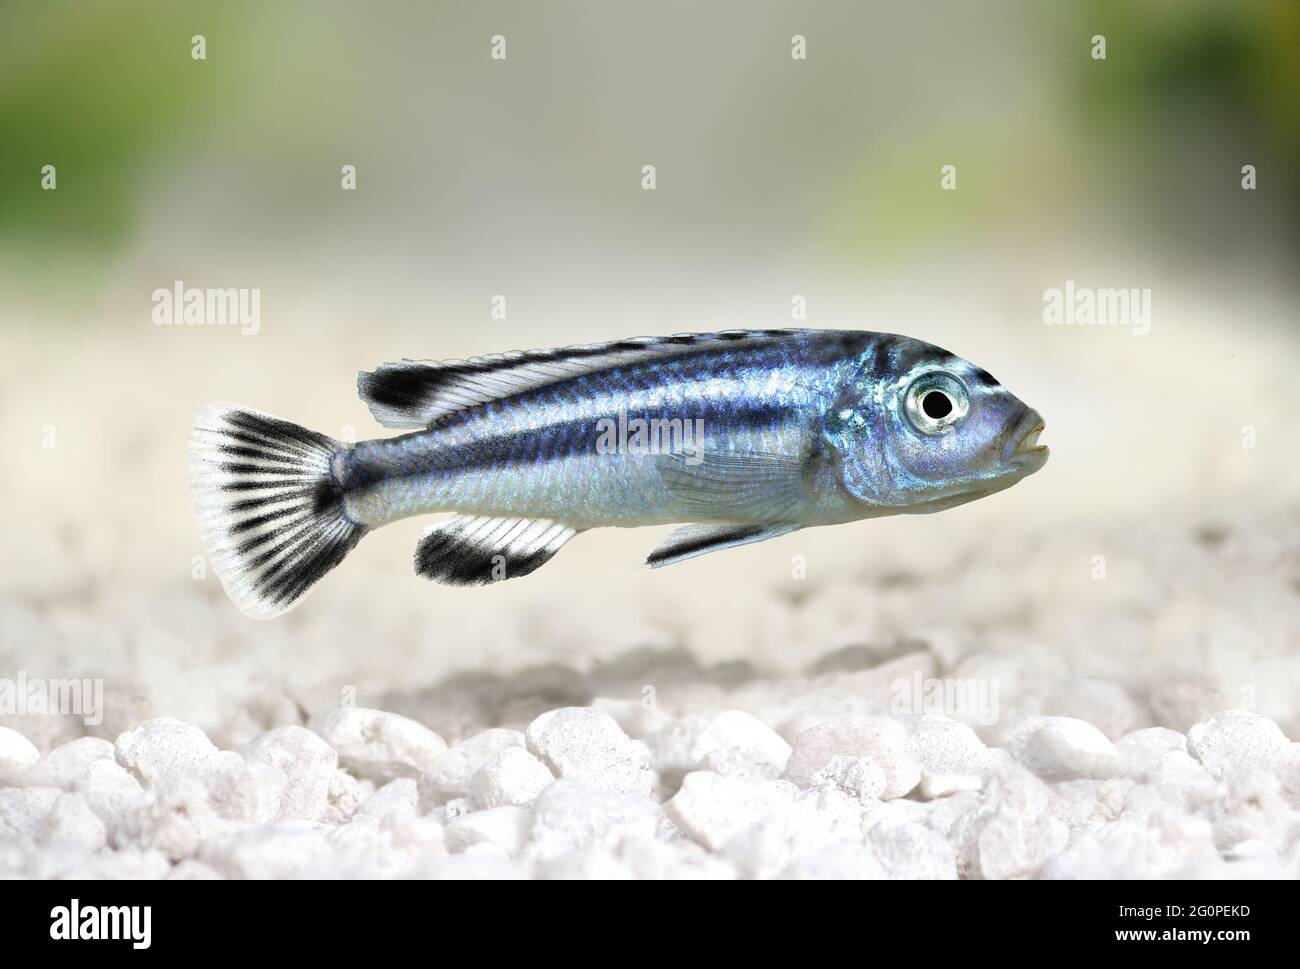 bluegray mbuna malawi cichlid Melanochromis johannii aquarium fish johanni Stock Photo